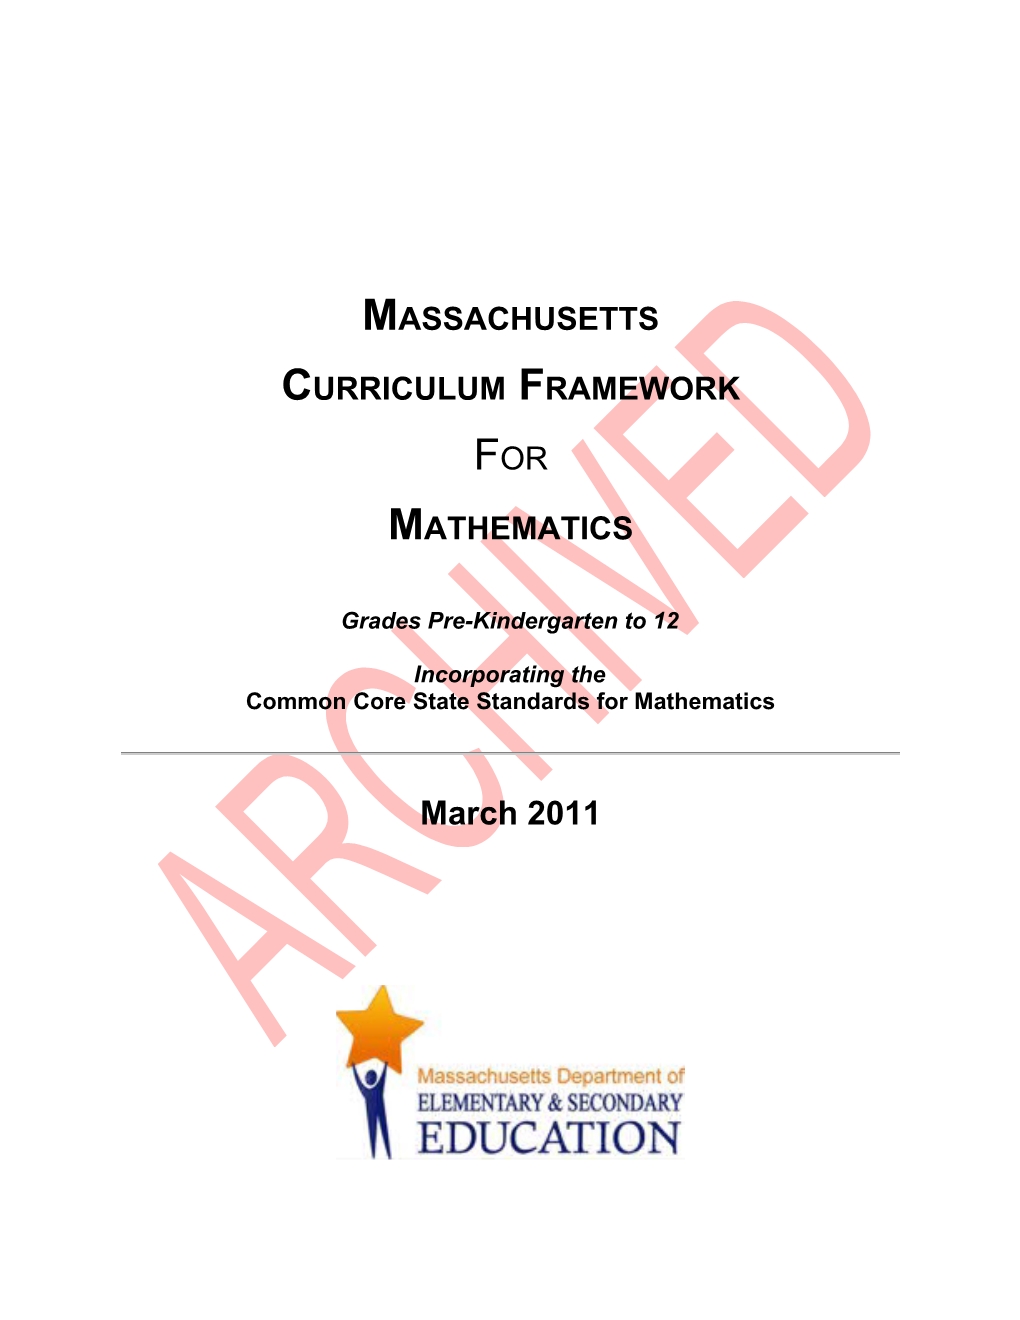 ARCHIVED: 2011 MA Curriculum Framework for Mathematics, Pre-K-12